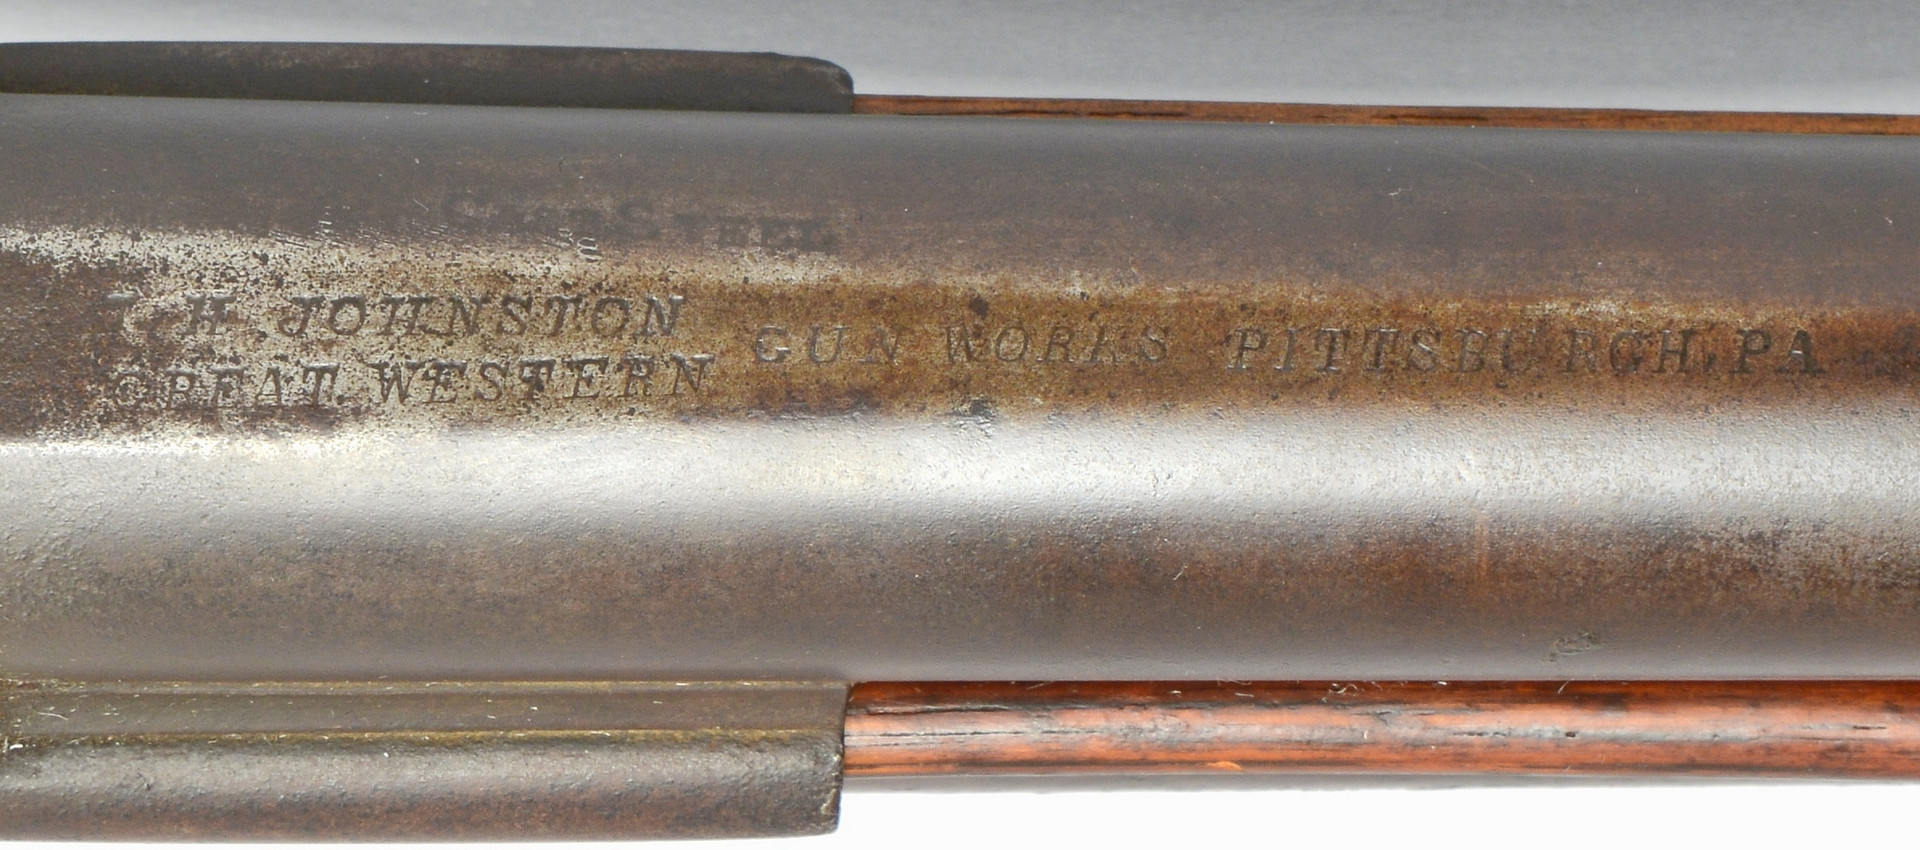 Lot 411: J. H. Johnston Rifle Over Shotgun Combination